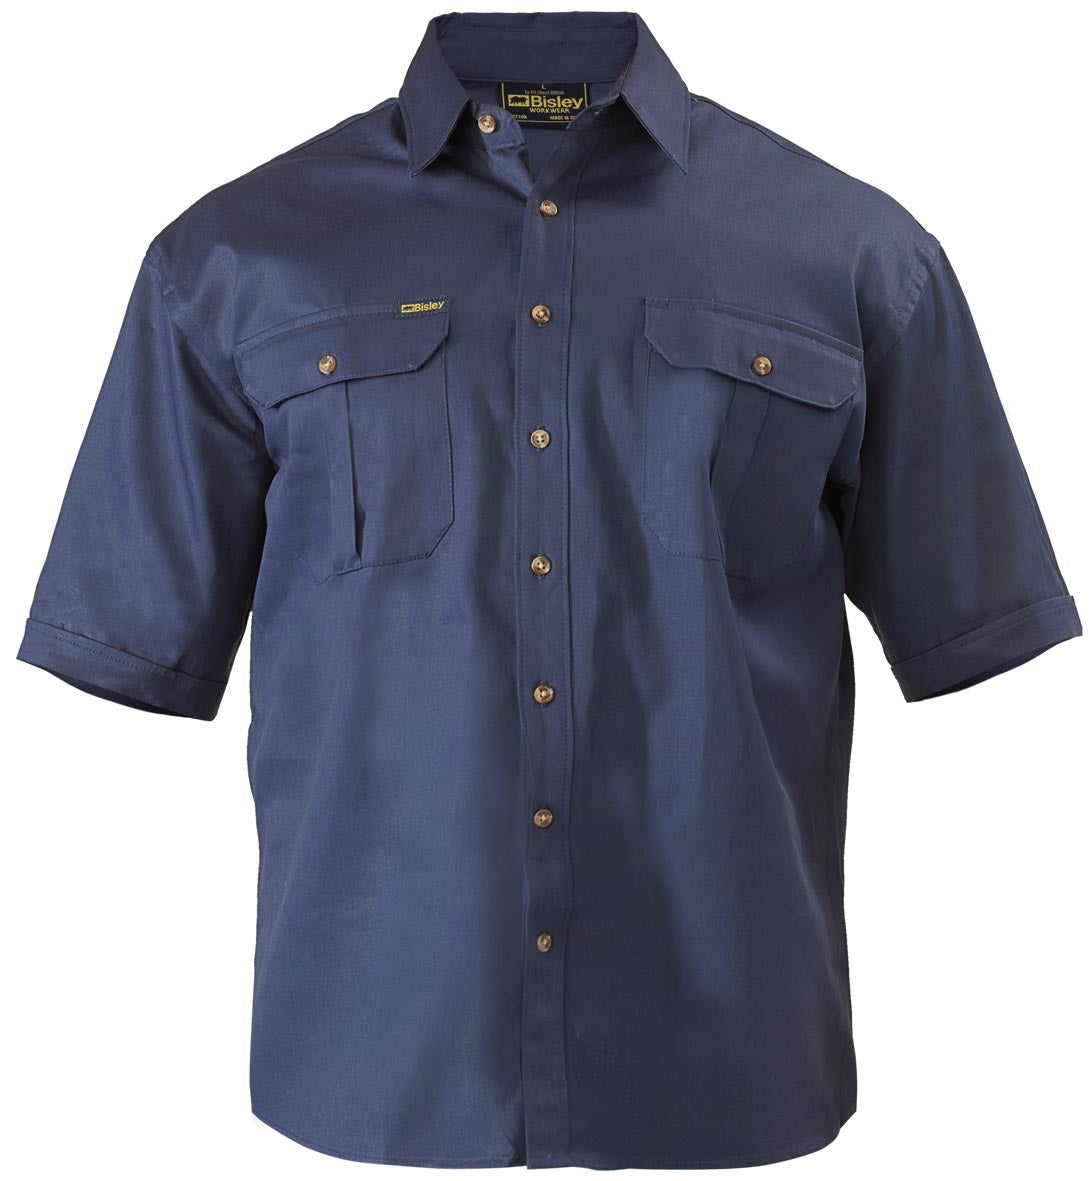 Bisley Original Cotton Drill Work Shirt - Short Sleeve S Navy Workwear by Bisley | The Bloke Shop